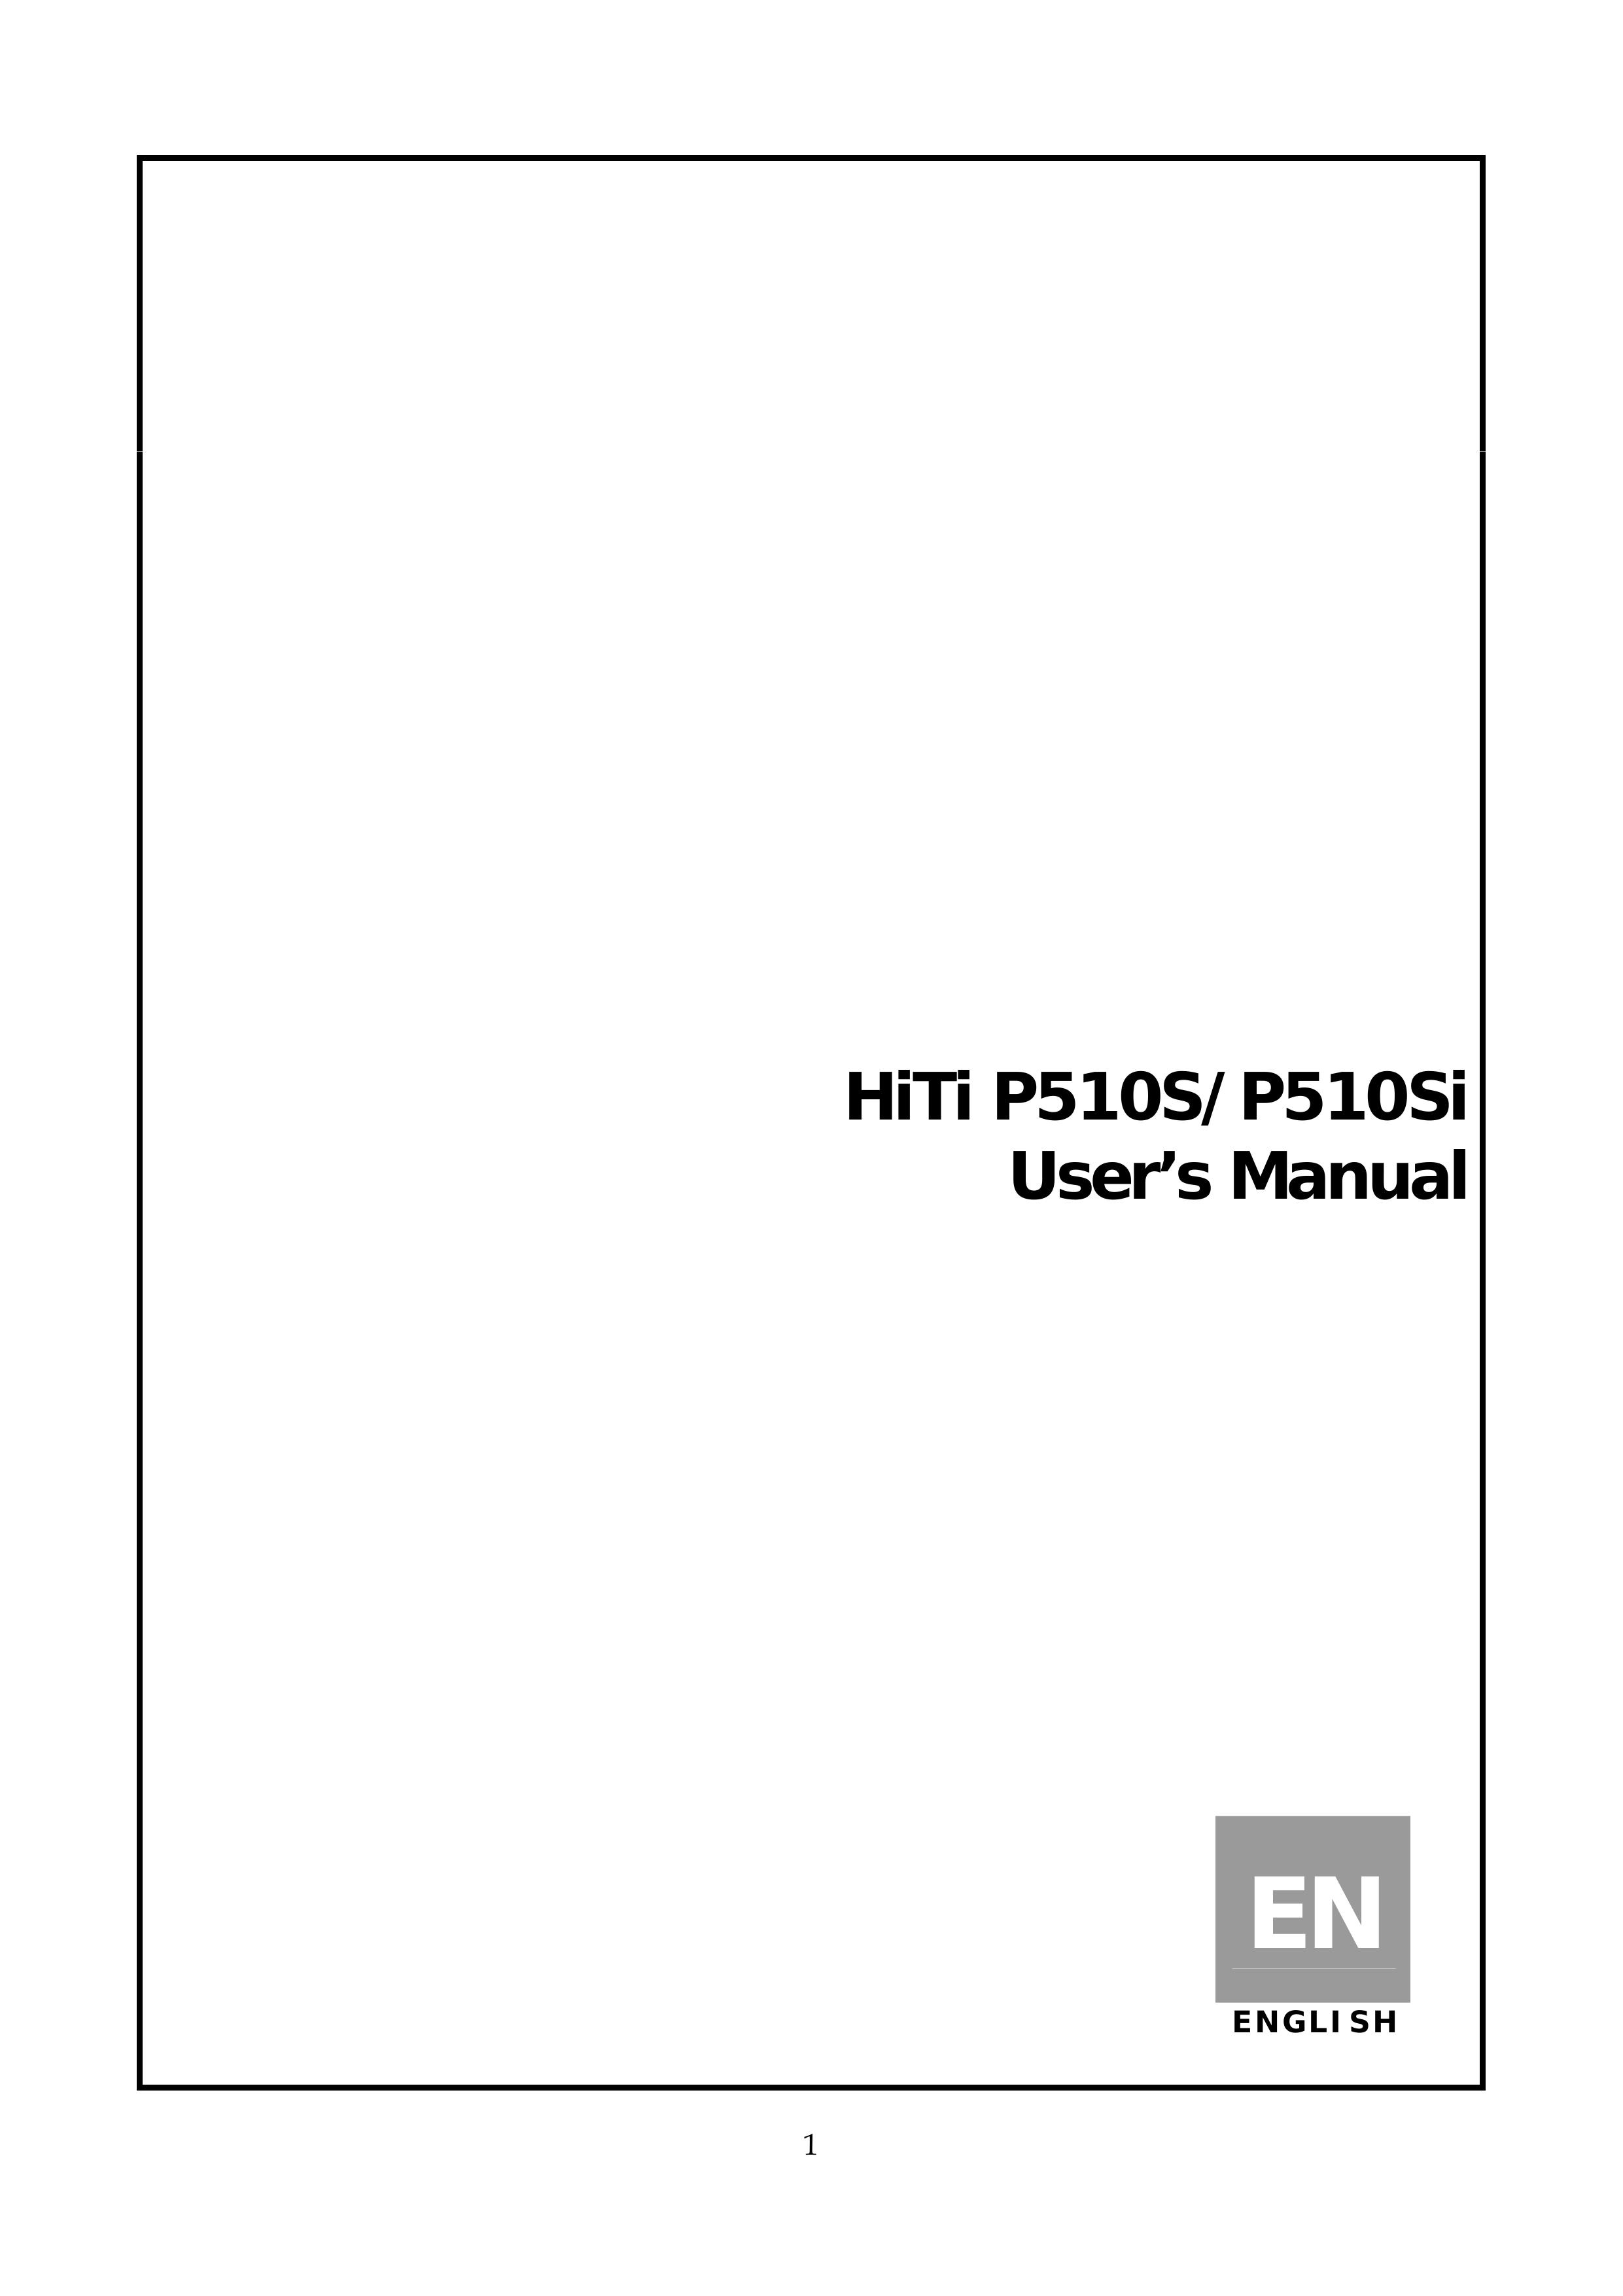 Hi-Touch Imaging Technologies P510S Photo Printer User Manual